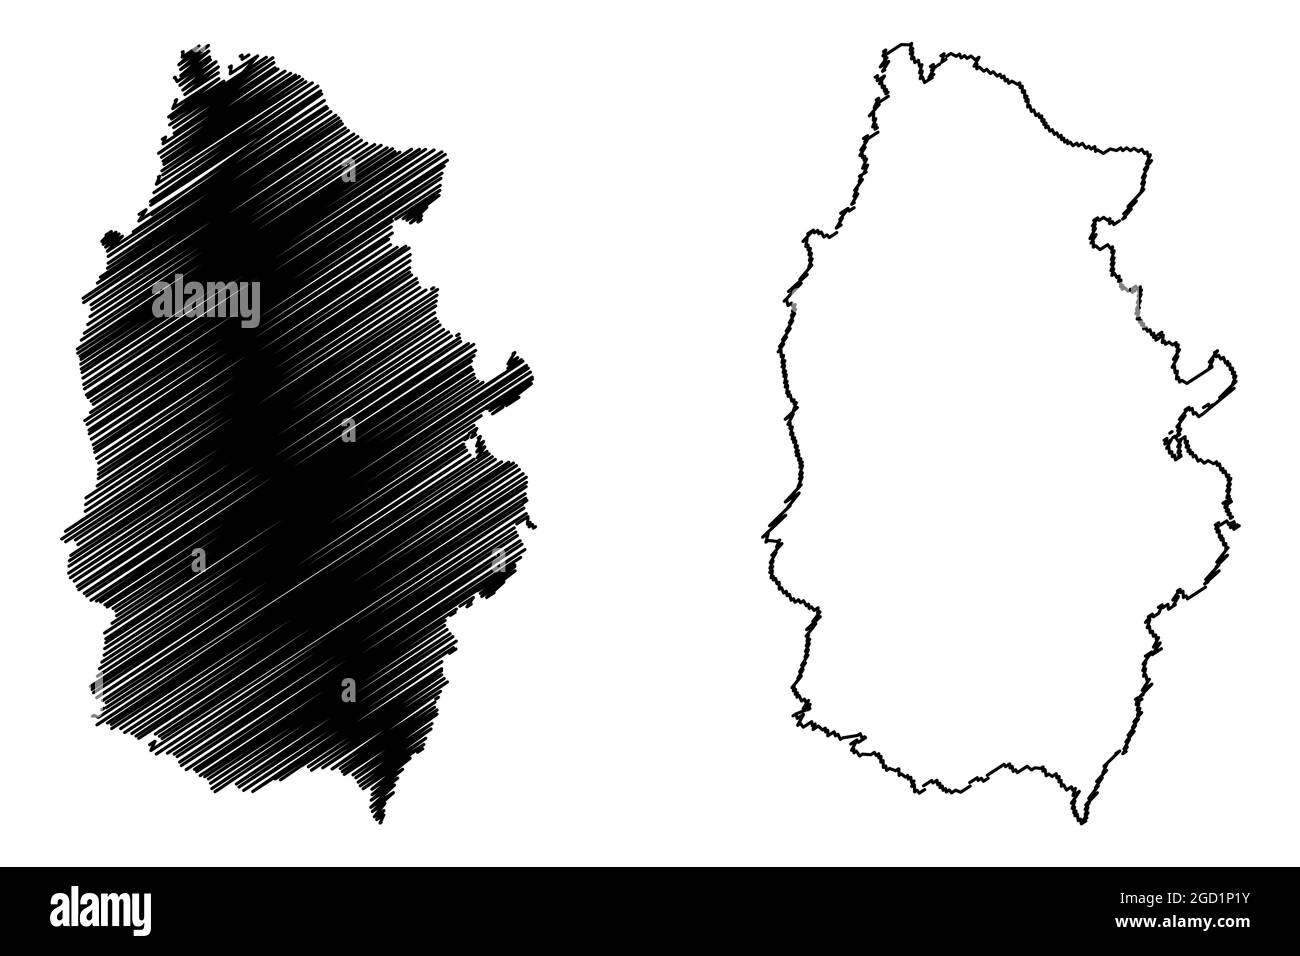 Province of Lugo (Kingdom of Spain, Autonomous community of Galicia) map vector illustration, scribble sketch Lugo map Stock Vector